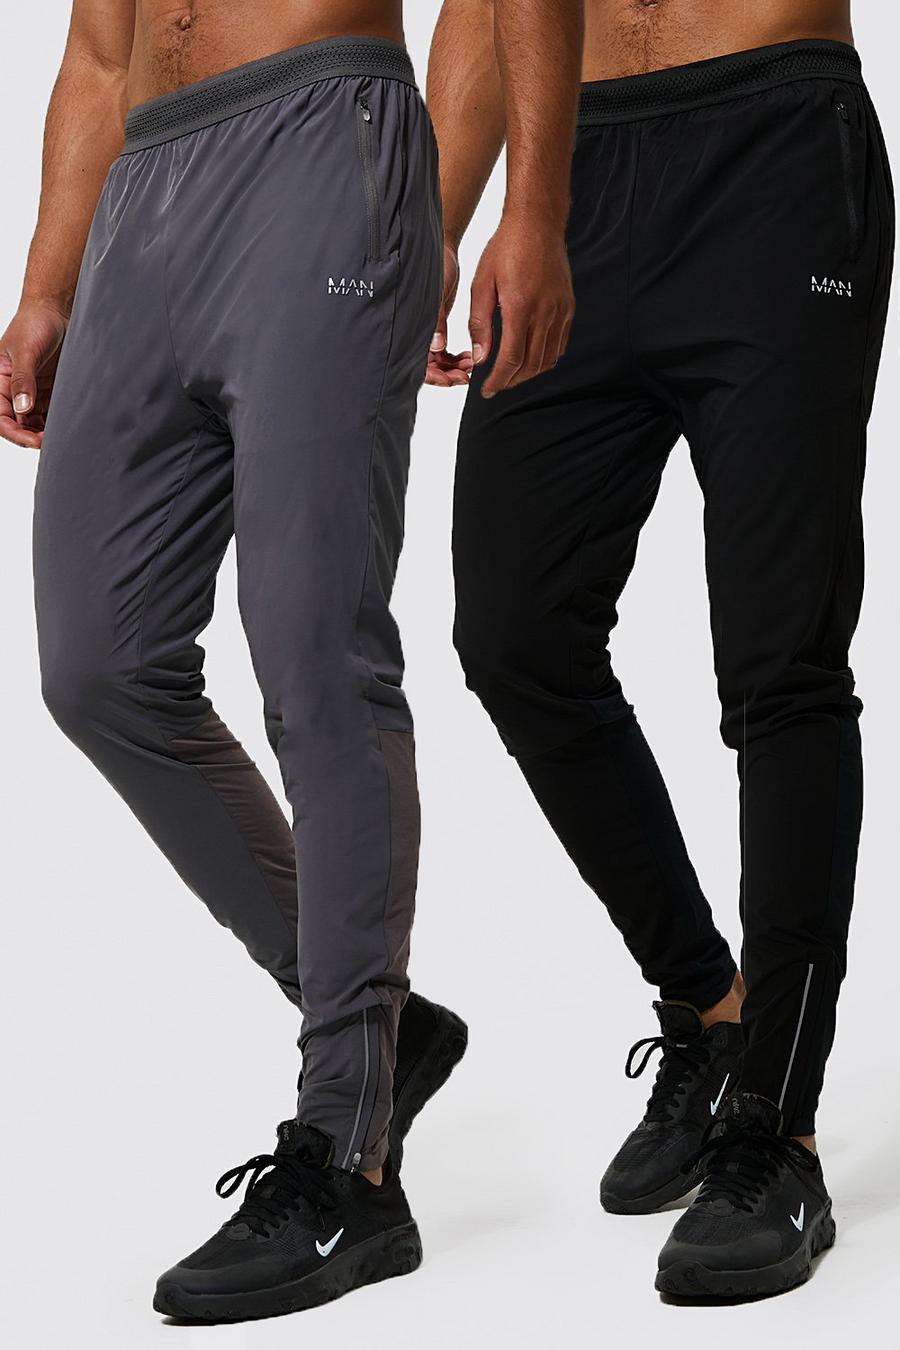 Pack de 2 pantalones de chándal Tall MAN Active deportivos ligeros, Black negro